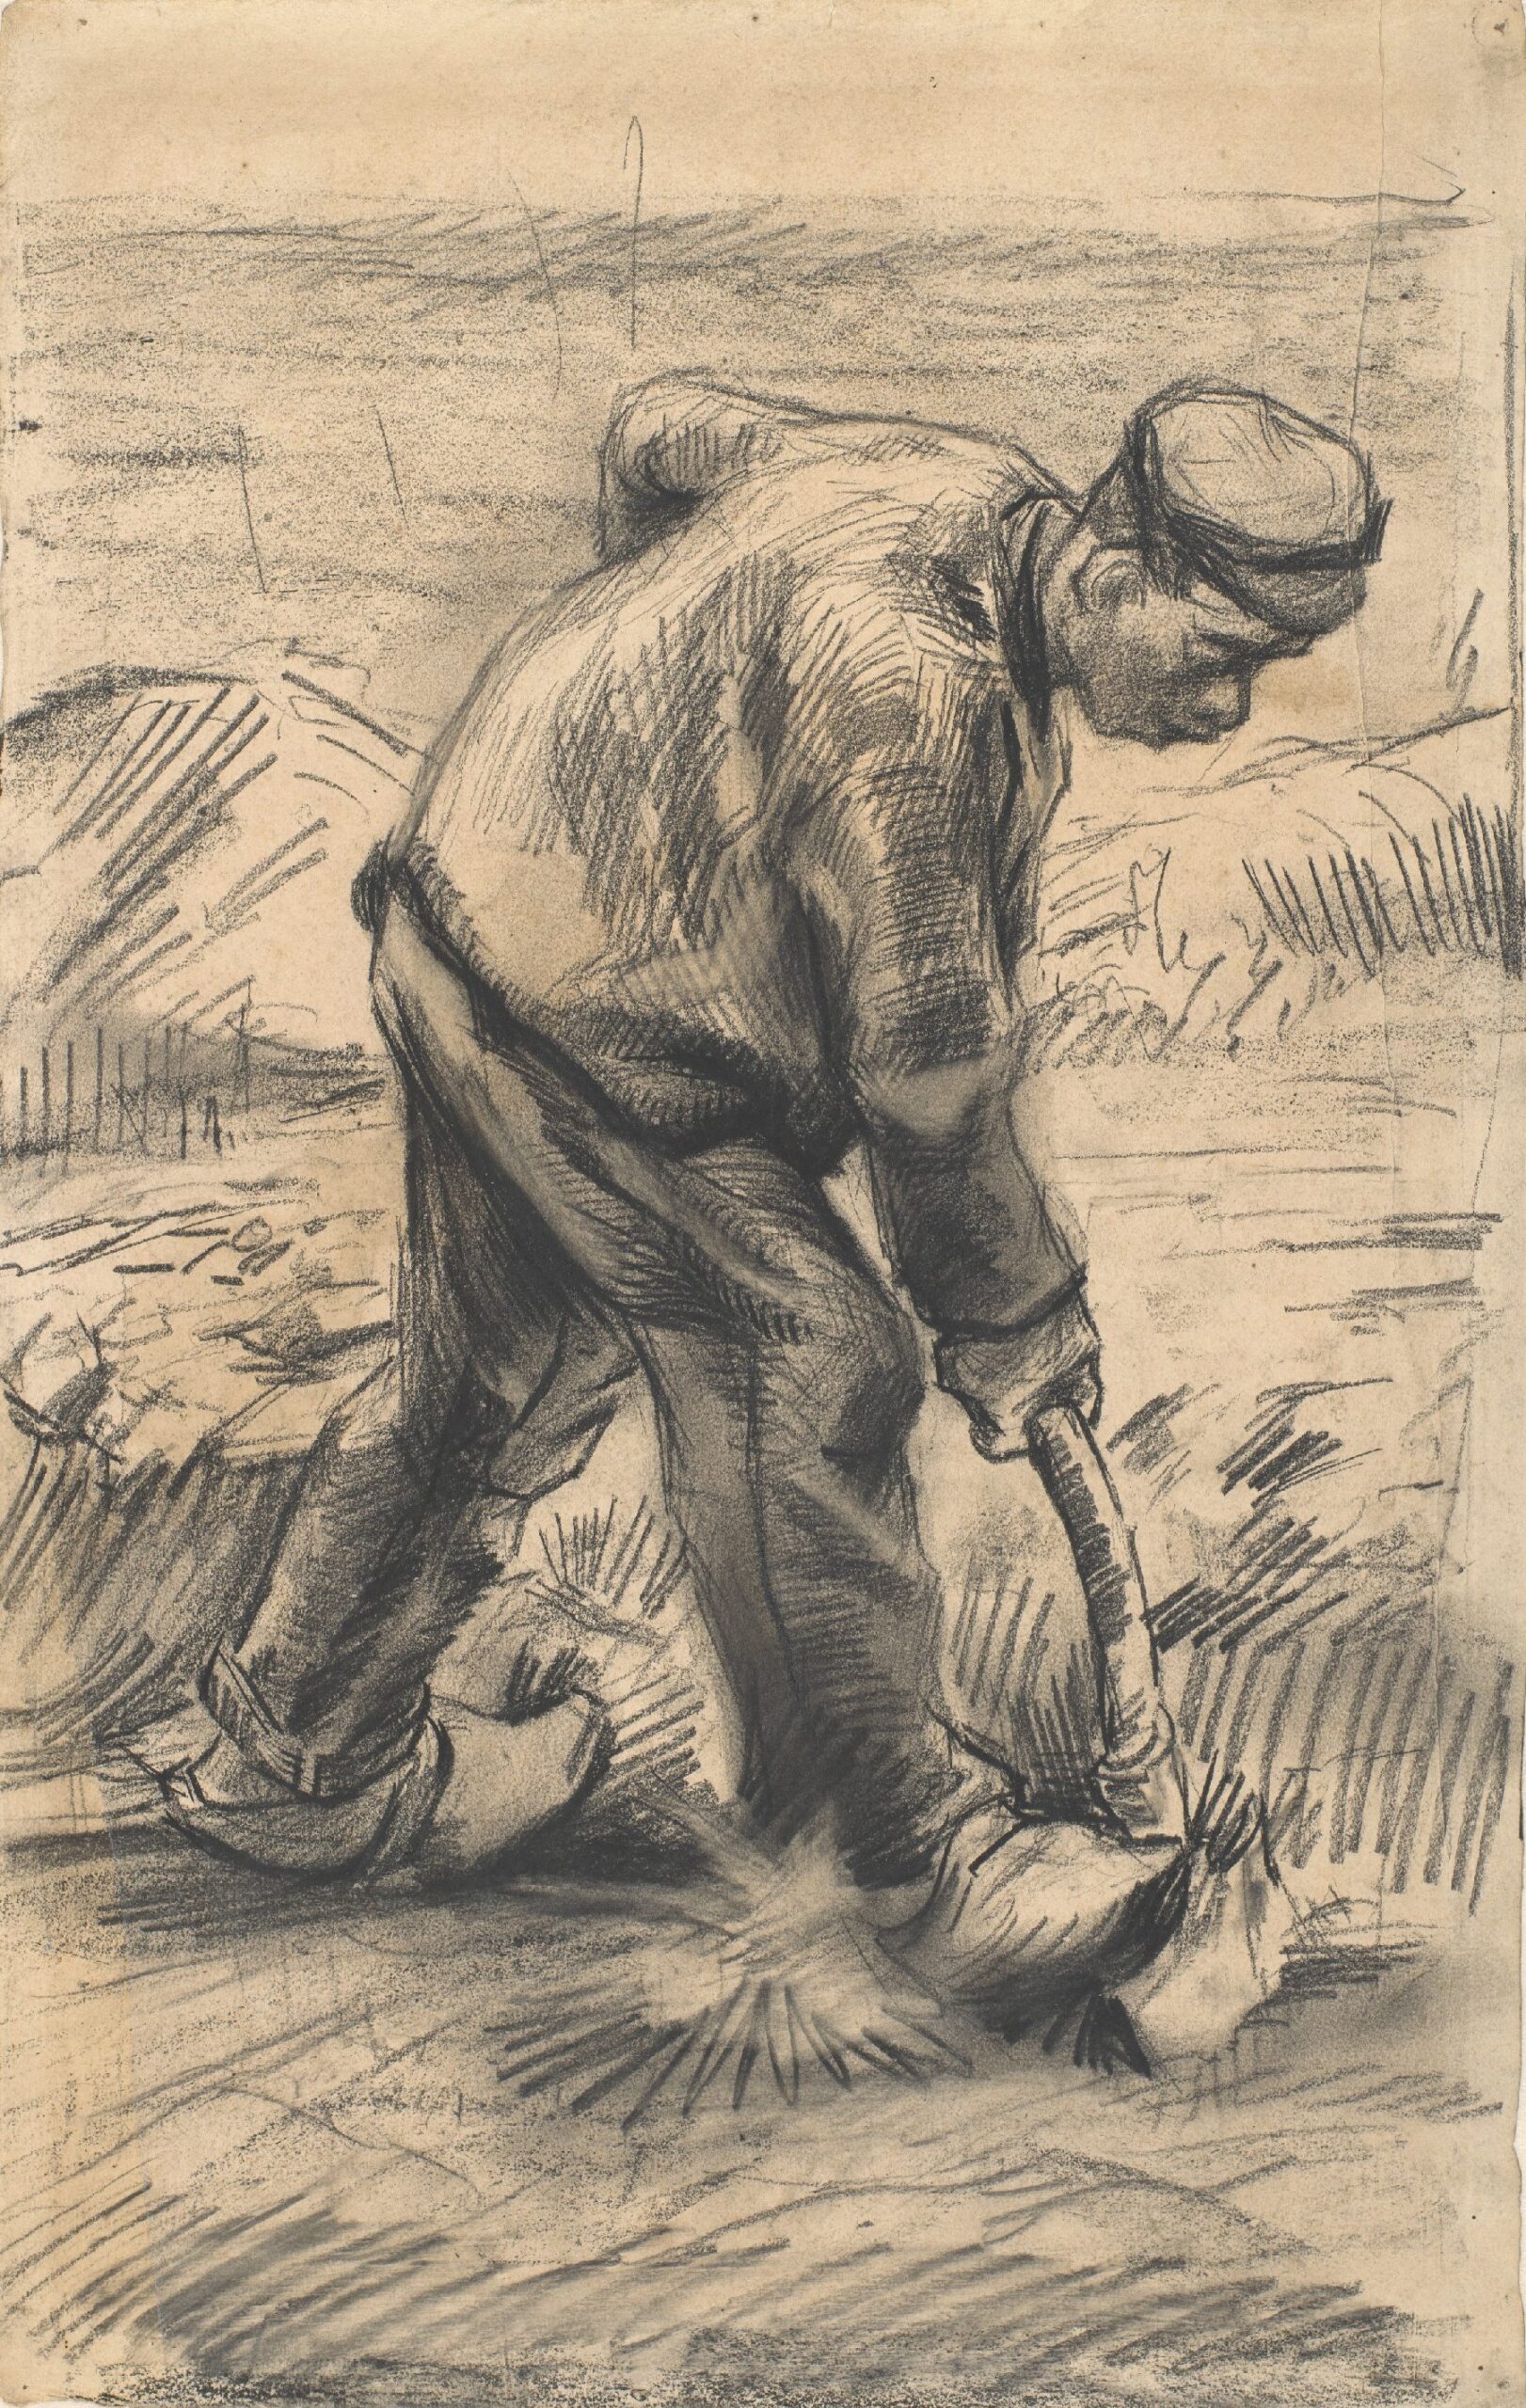 Spitter Vincent van Gogh (1853 - 1890), Nuenen, juli-september 1885